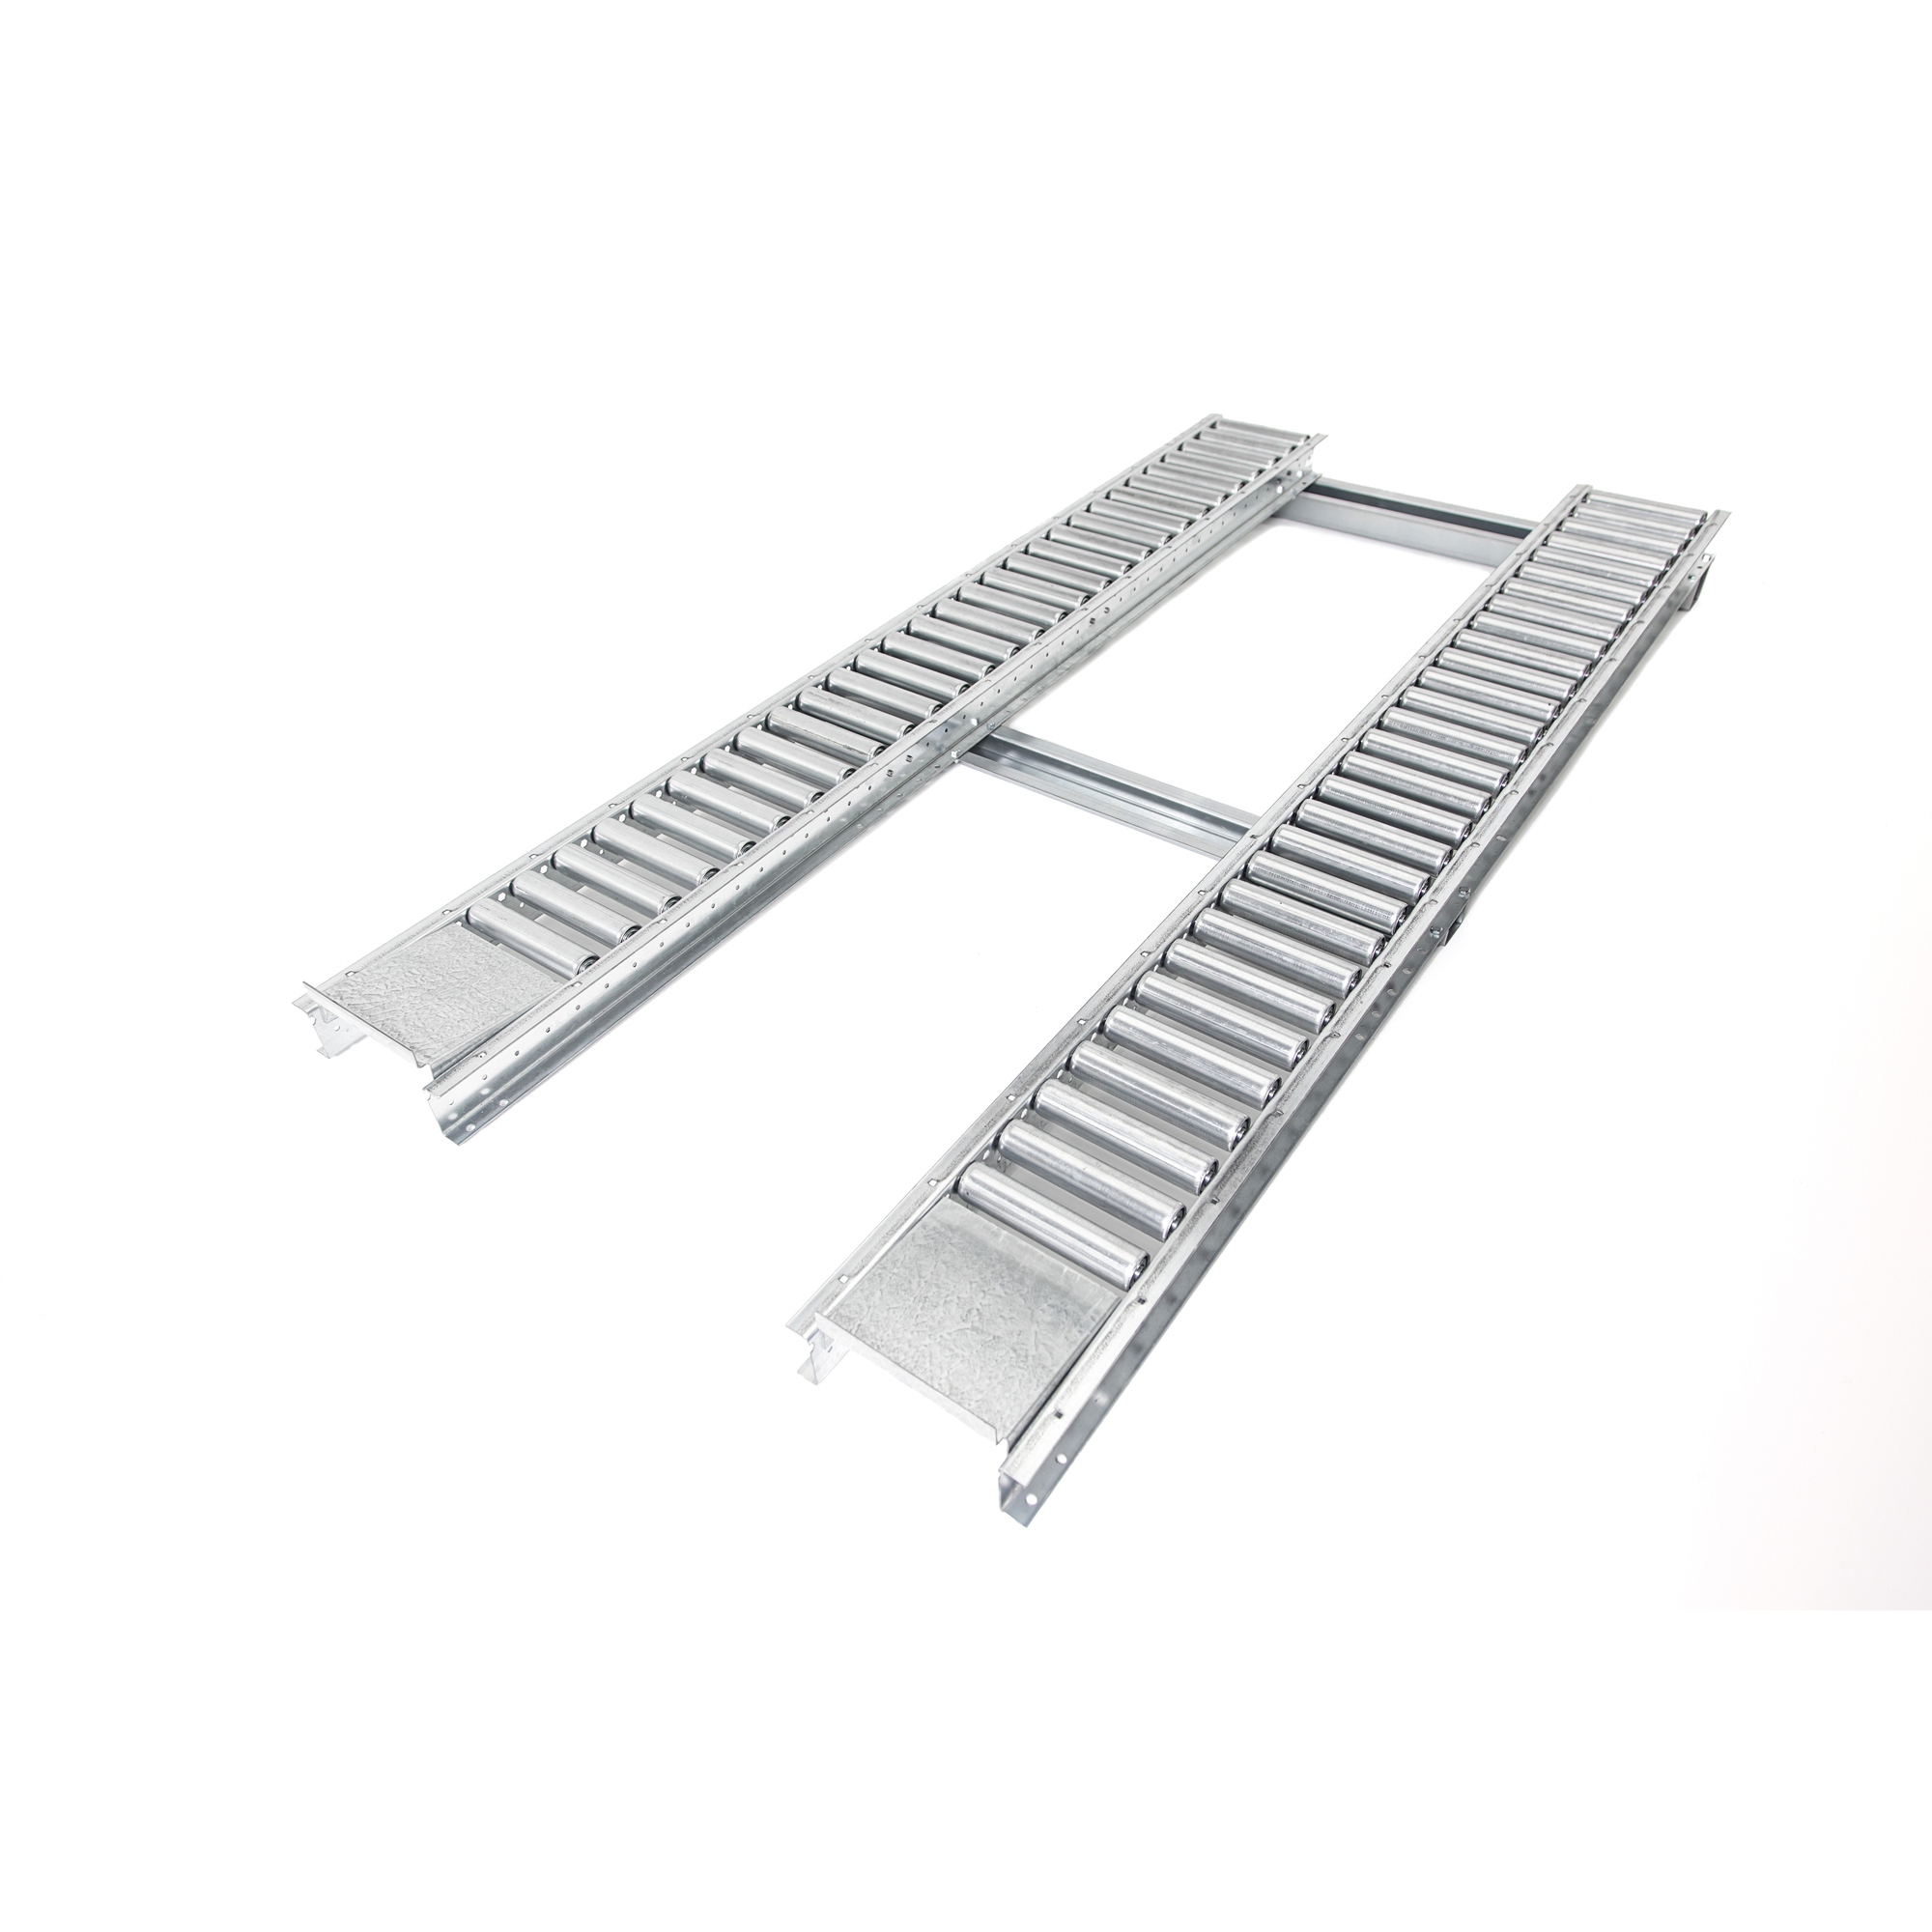 Unex, Pallet Track Floor Conveyor, Capacity 8,000 lb, Model PTMRS23050X96